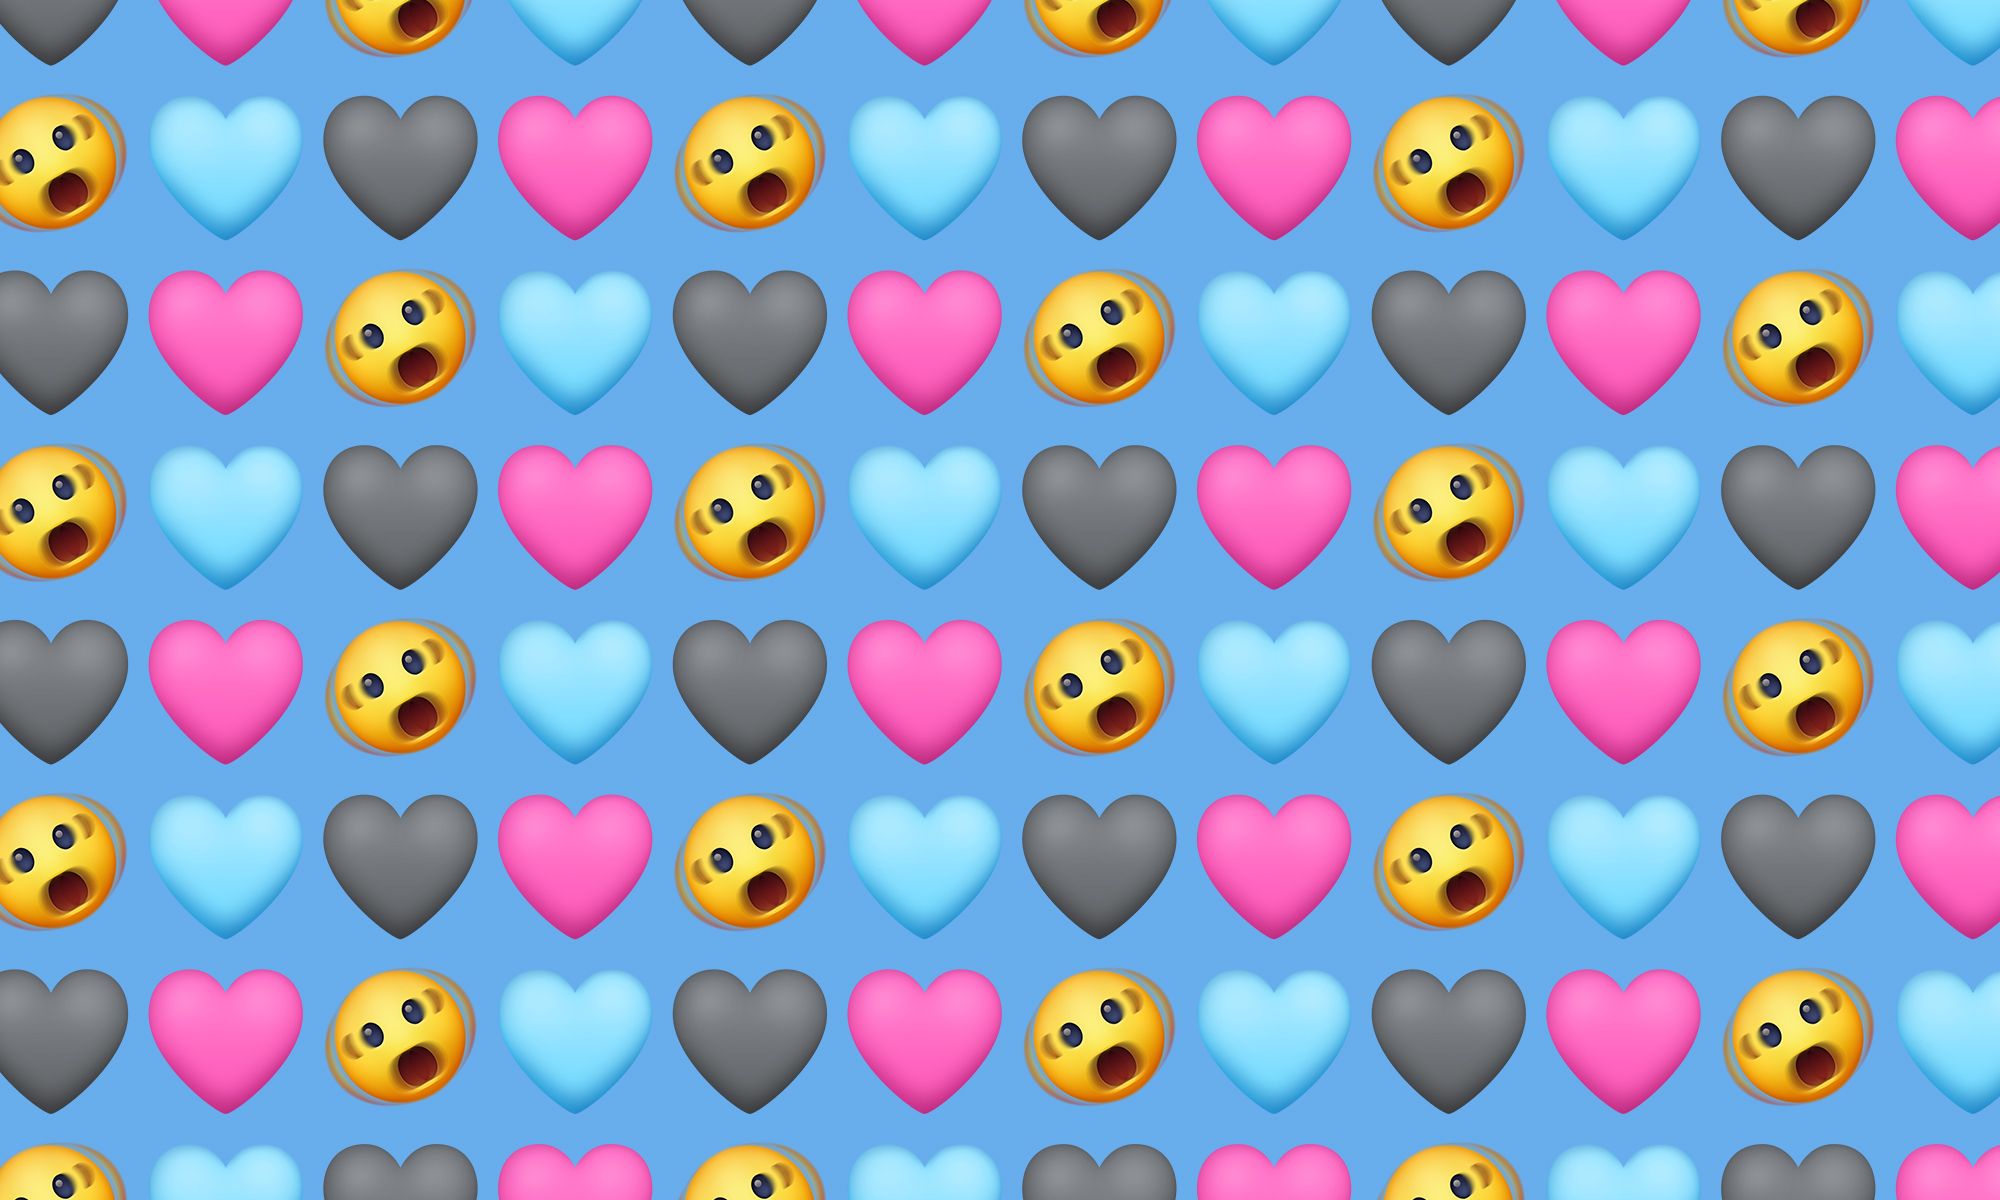 Open Eye Laugh Crying Emoji  emojidex - custom emoji service and apps